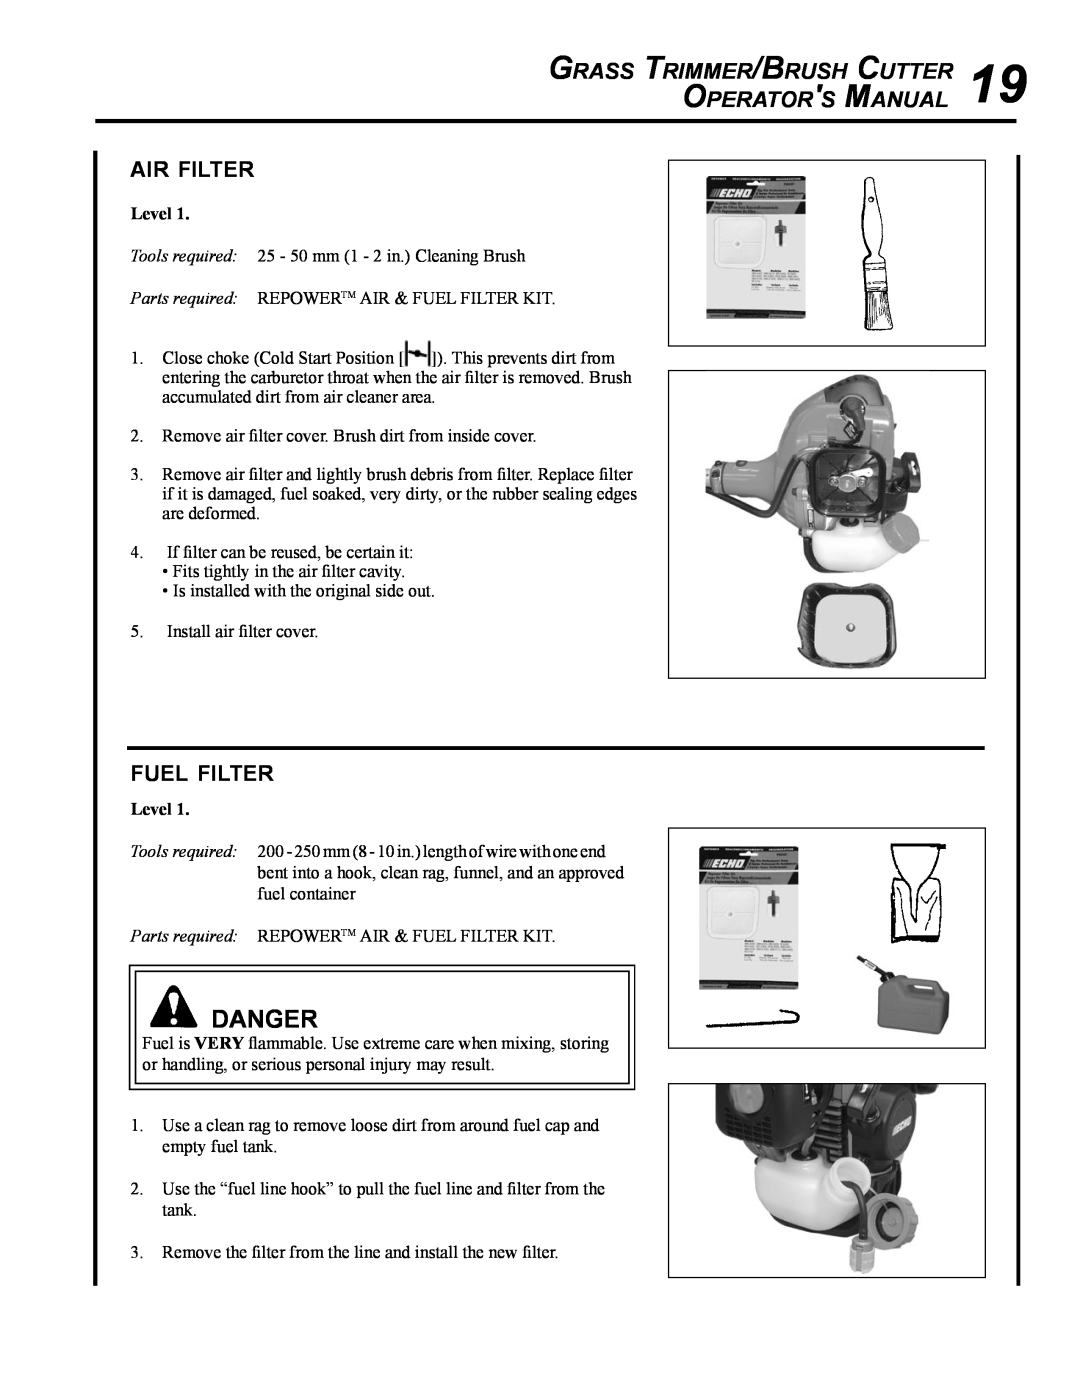 Echo SRM-280S manual air filter, fuel filter, Level, Danger, Grass Trimmer/Brush Cutter Operators Manual 